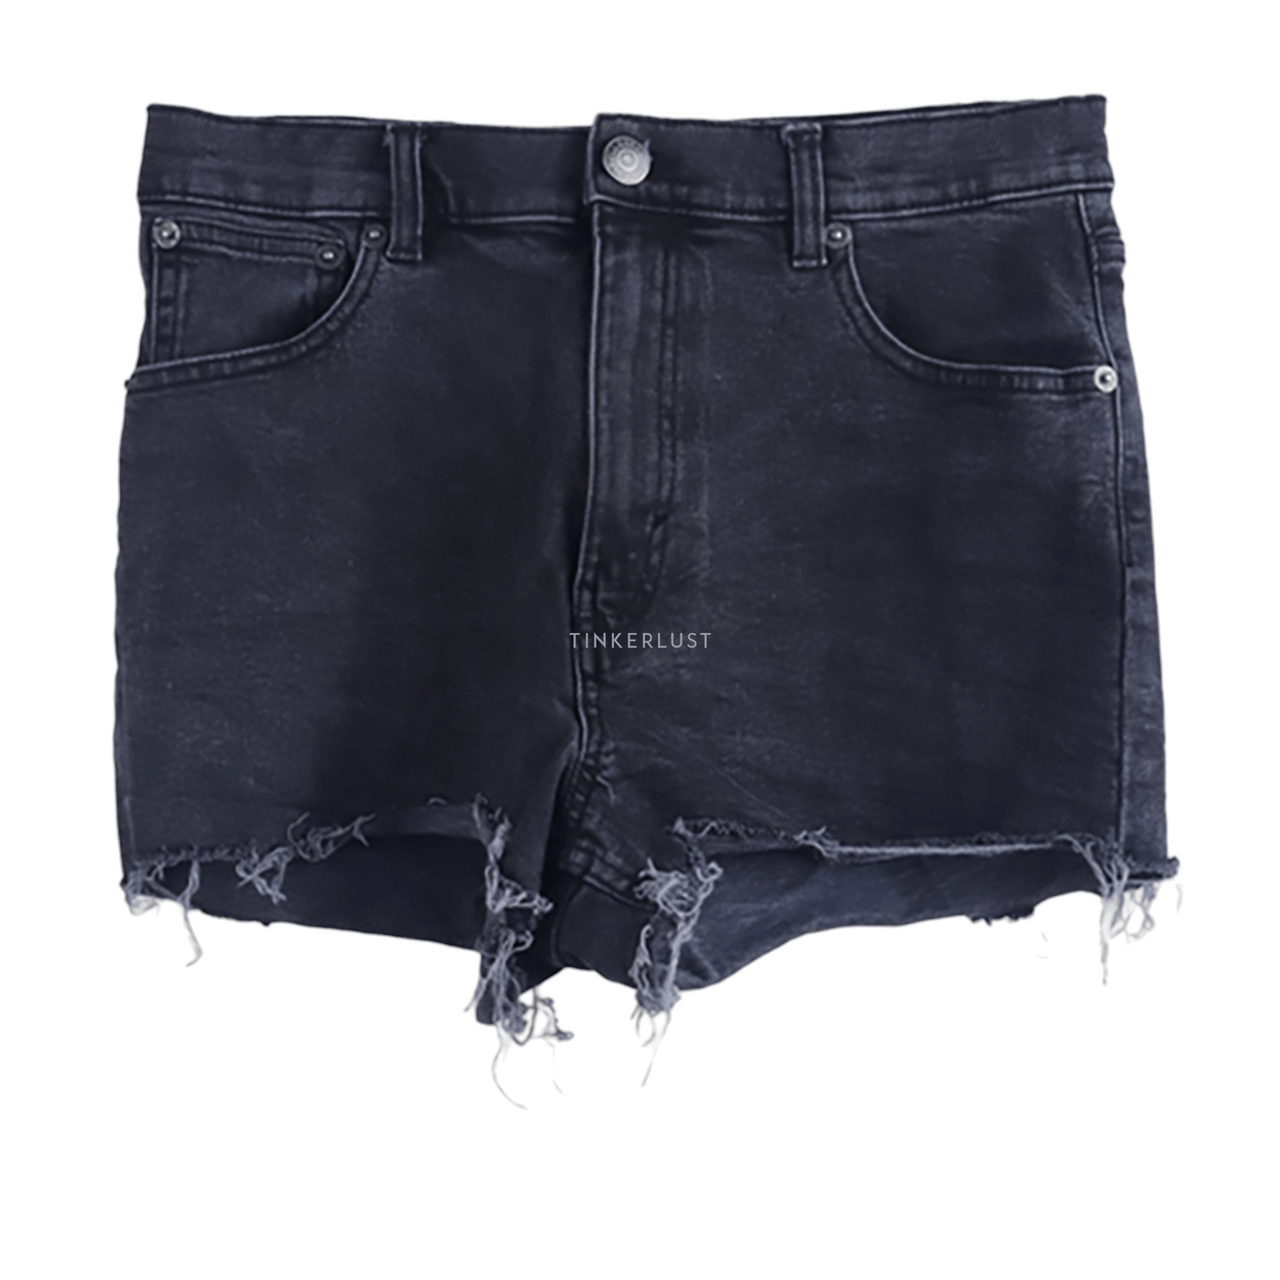 Pull & Bear Black Washed Unfinished Short Pants